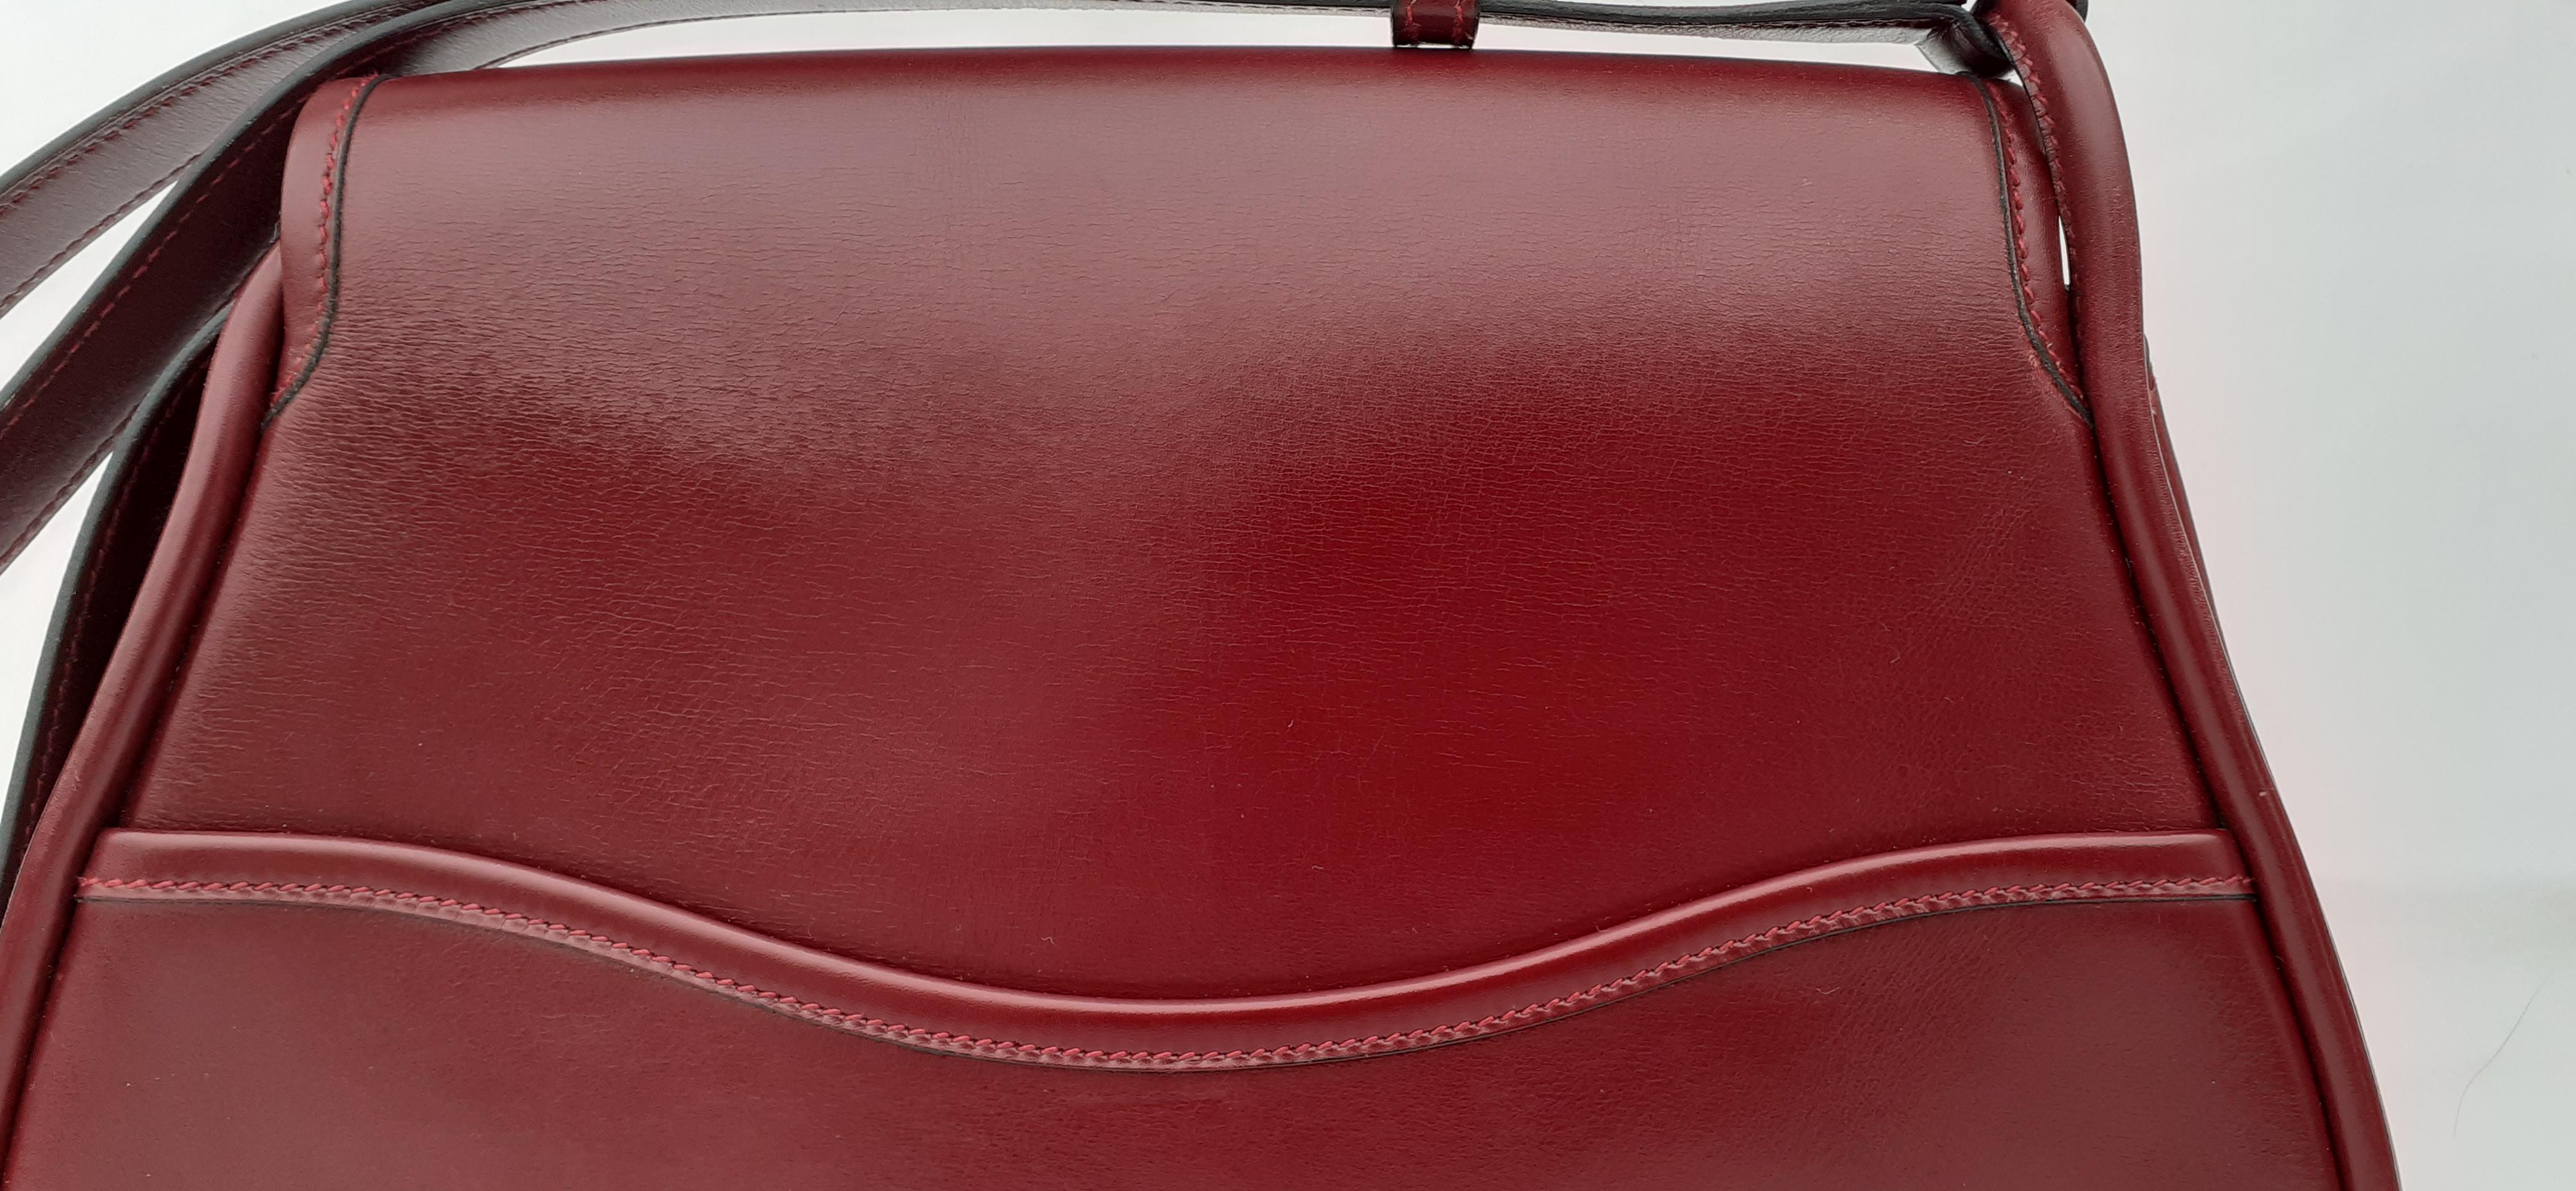 Exceptional Hermès Vintage Glika Bag Rouge H Box Leather Golden Hdw 28 cm For Sale 4